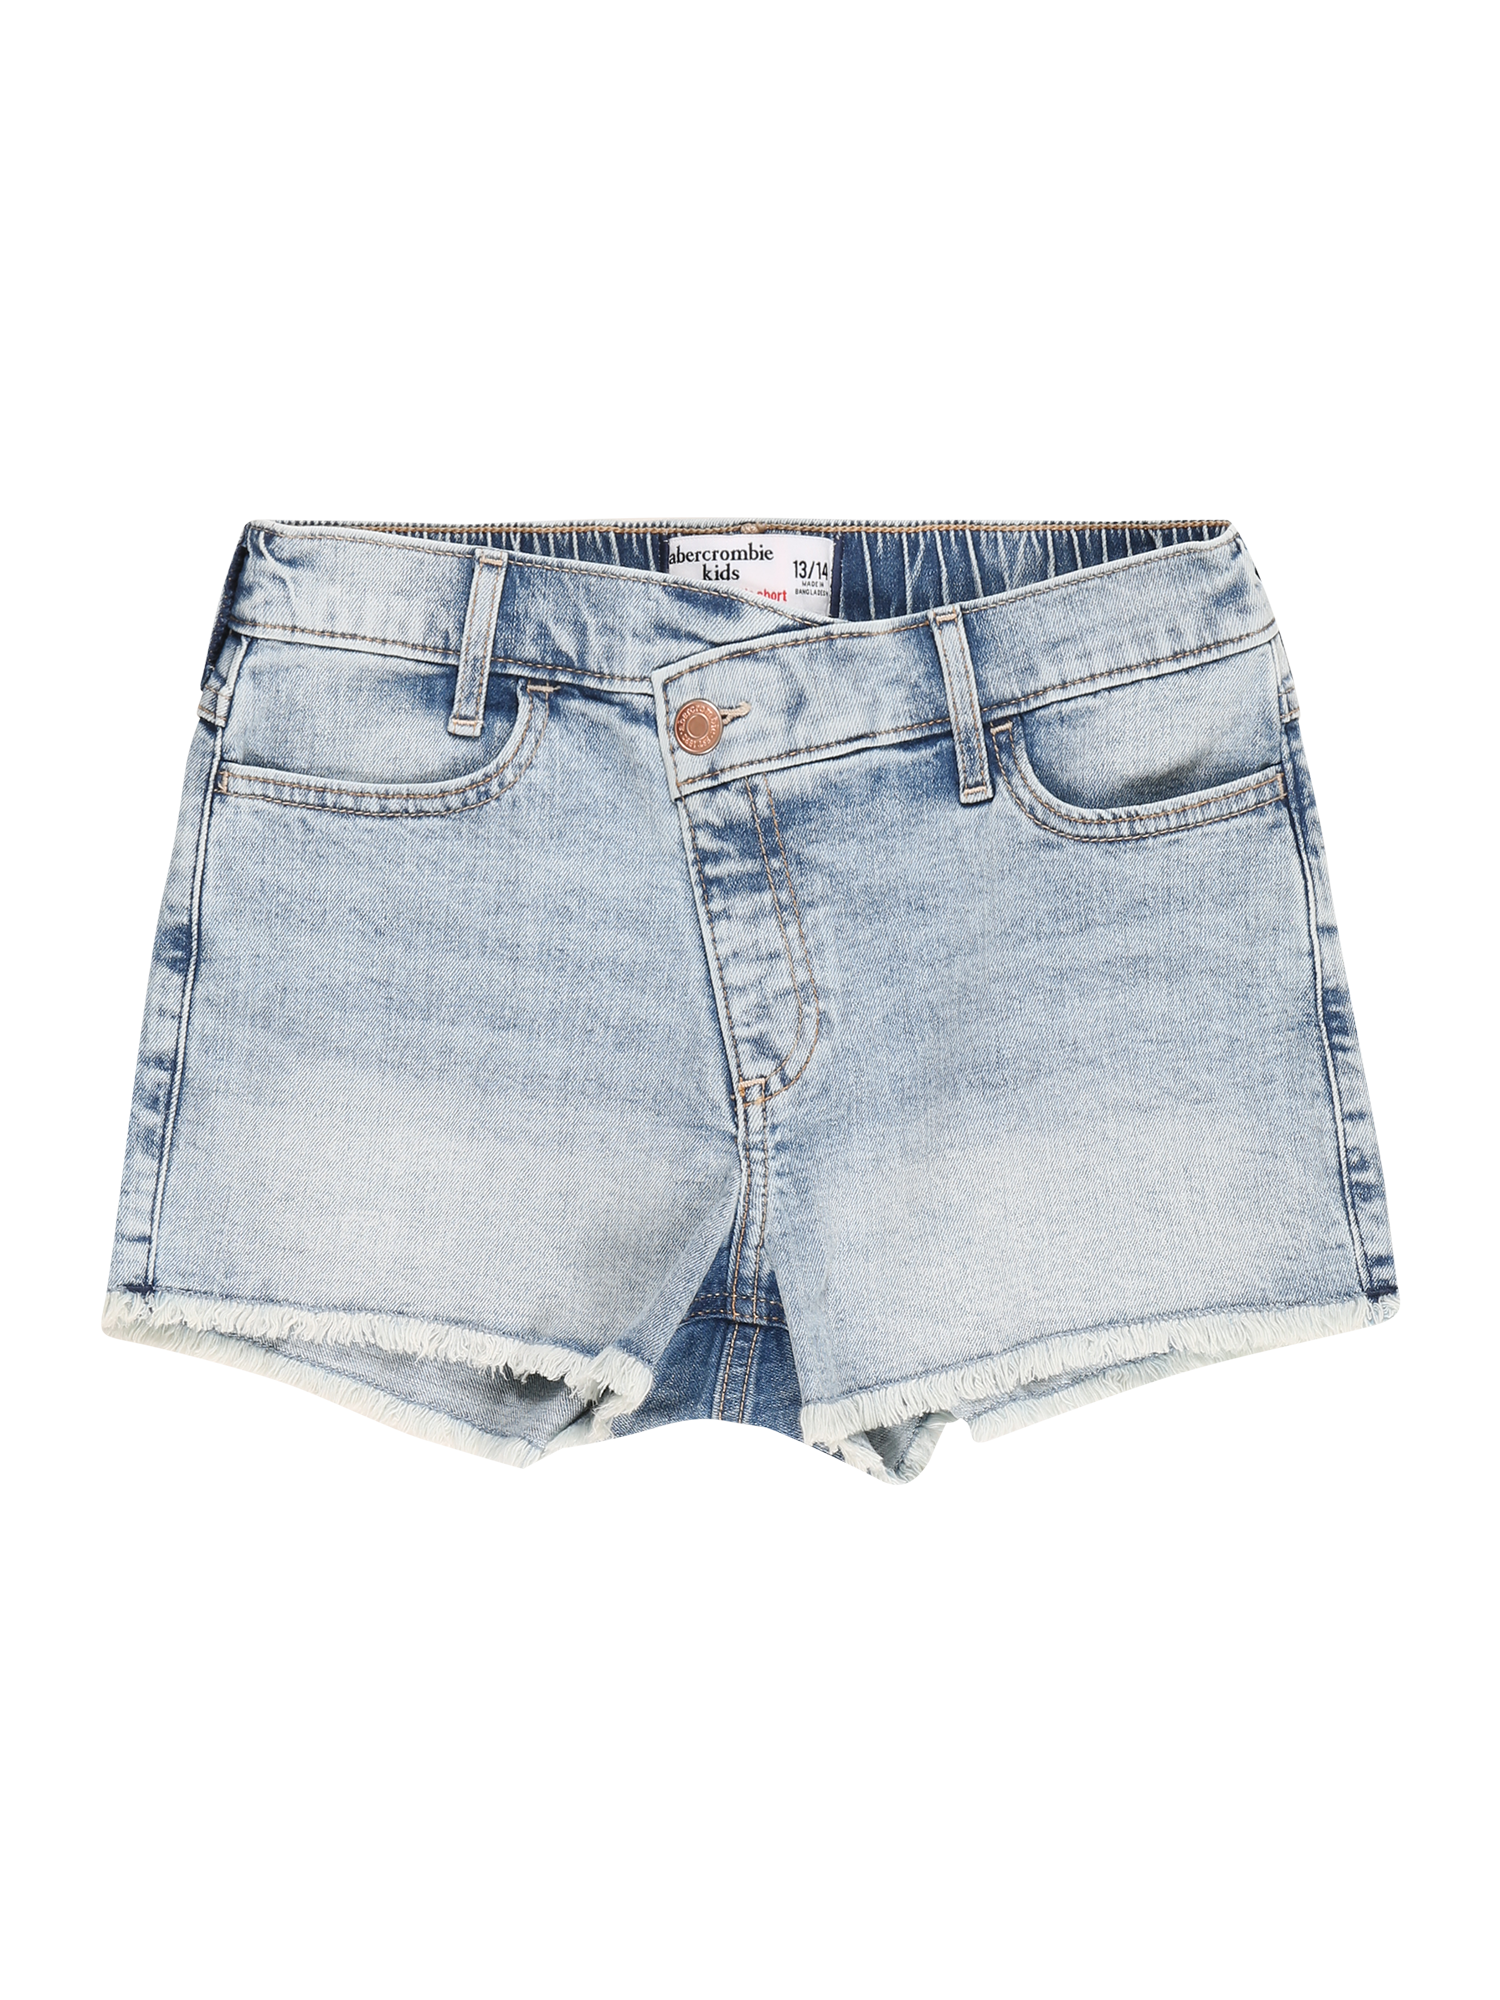 Bambina (taglie 92-140) Bambini Abercrombie & Fitch Jeans JAN in Blu Cielo 